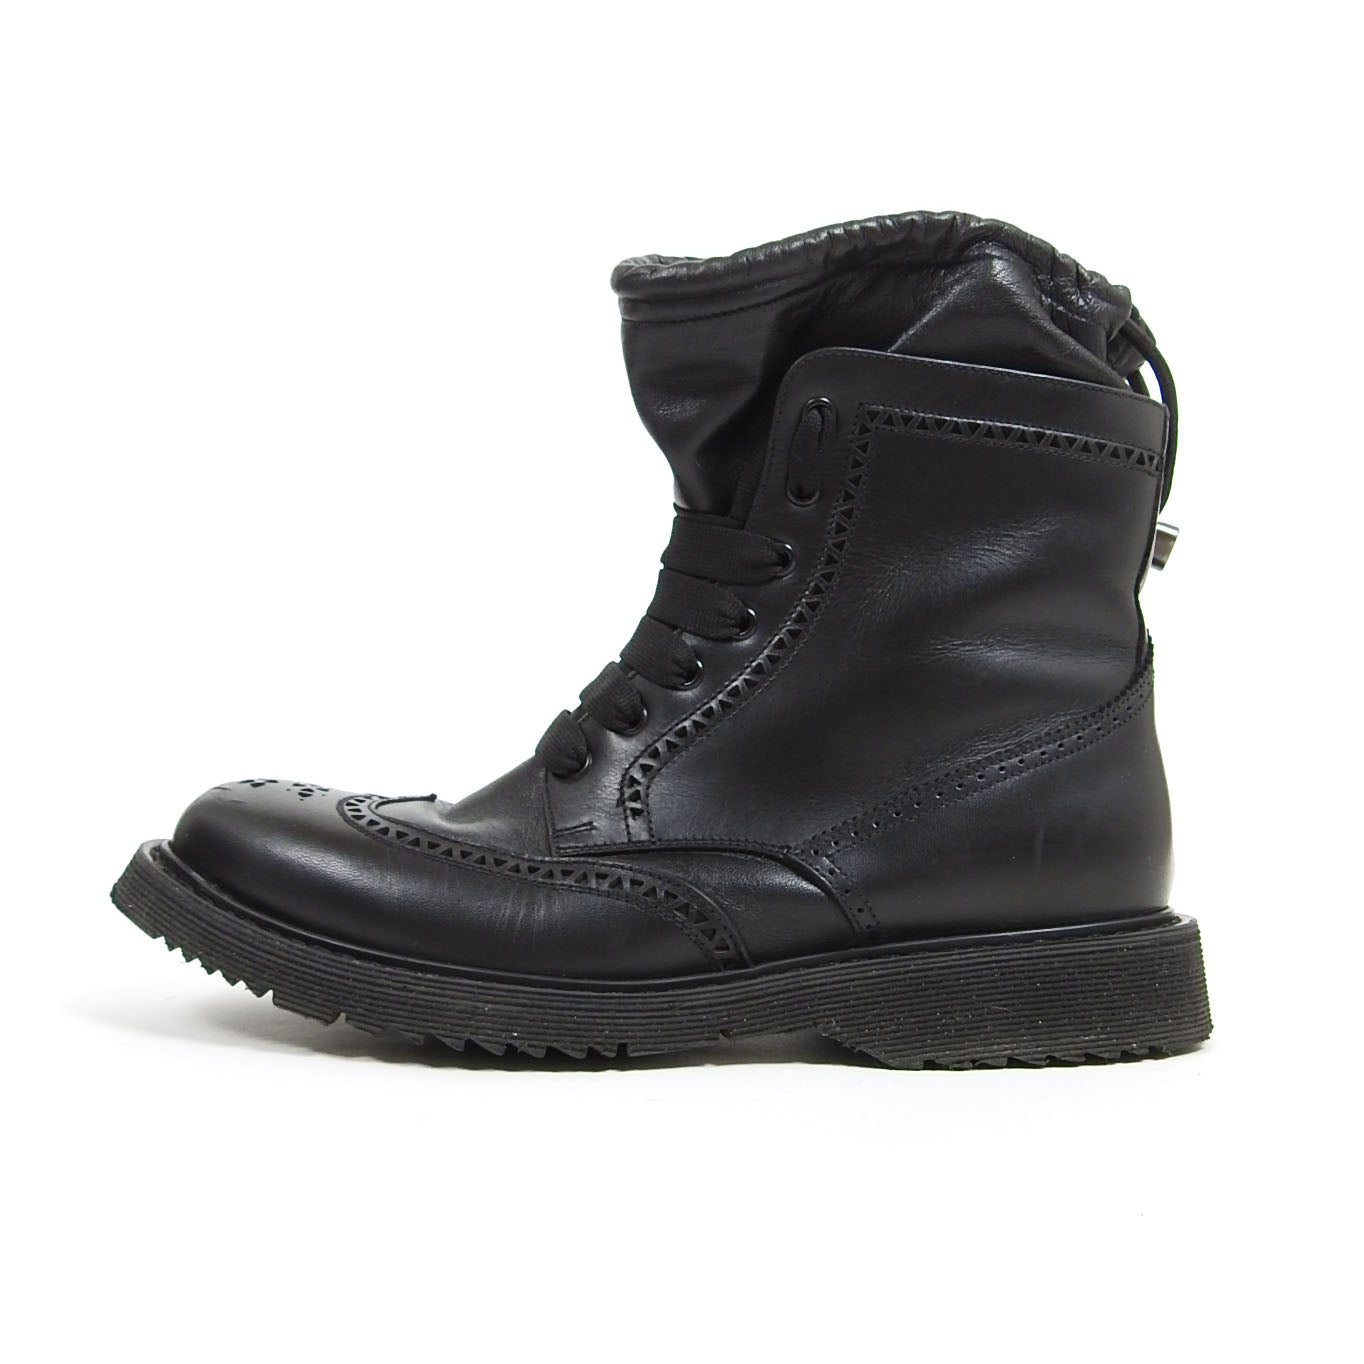 Prada Leather Boots Size 8.5